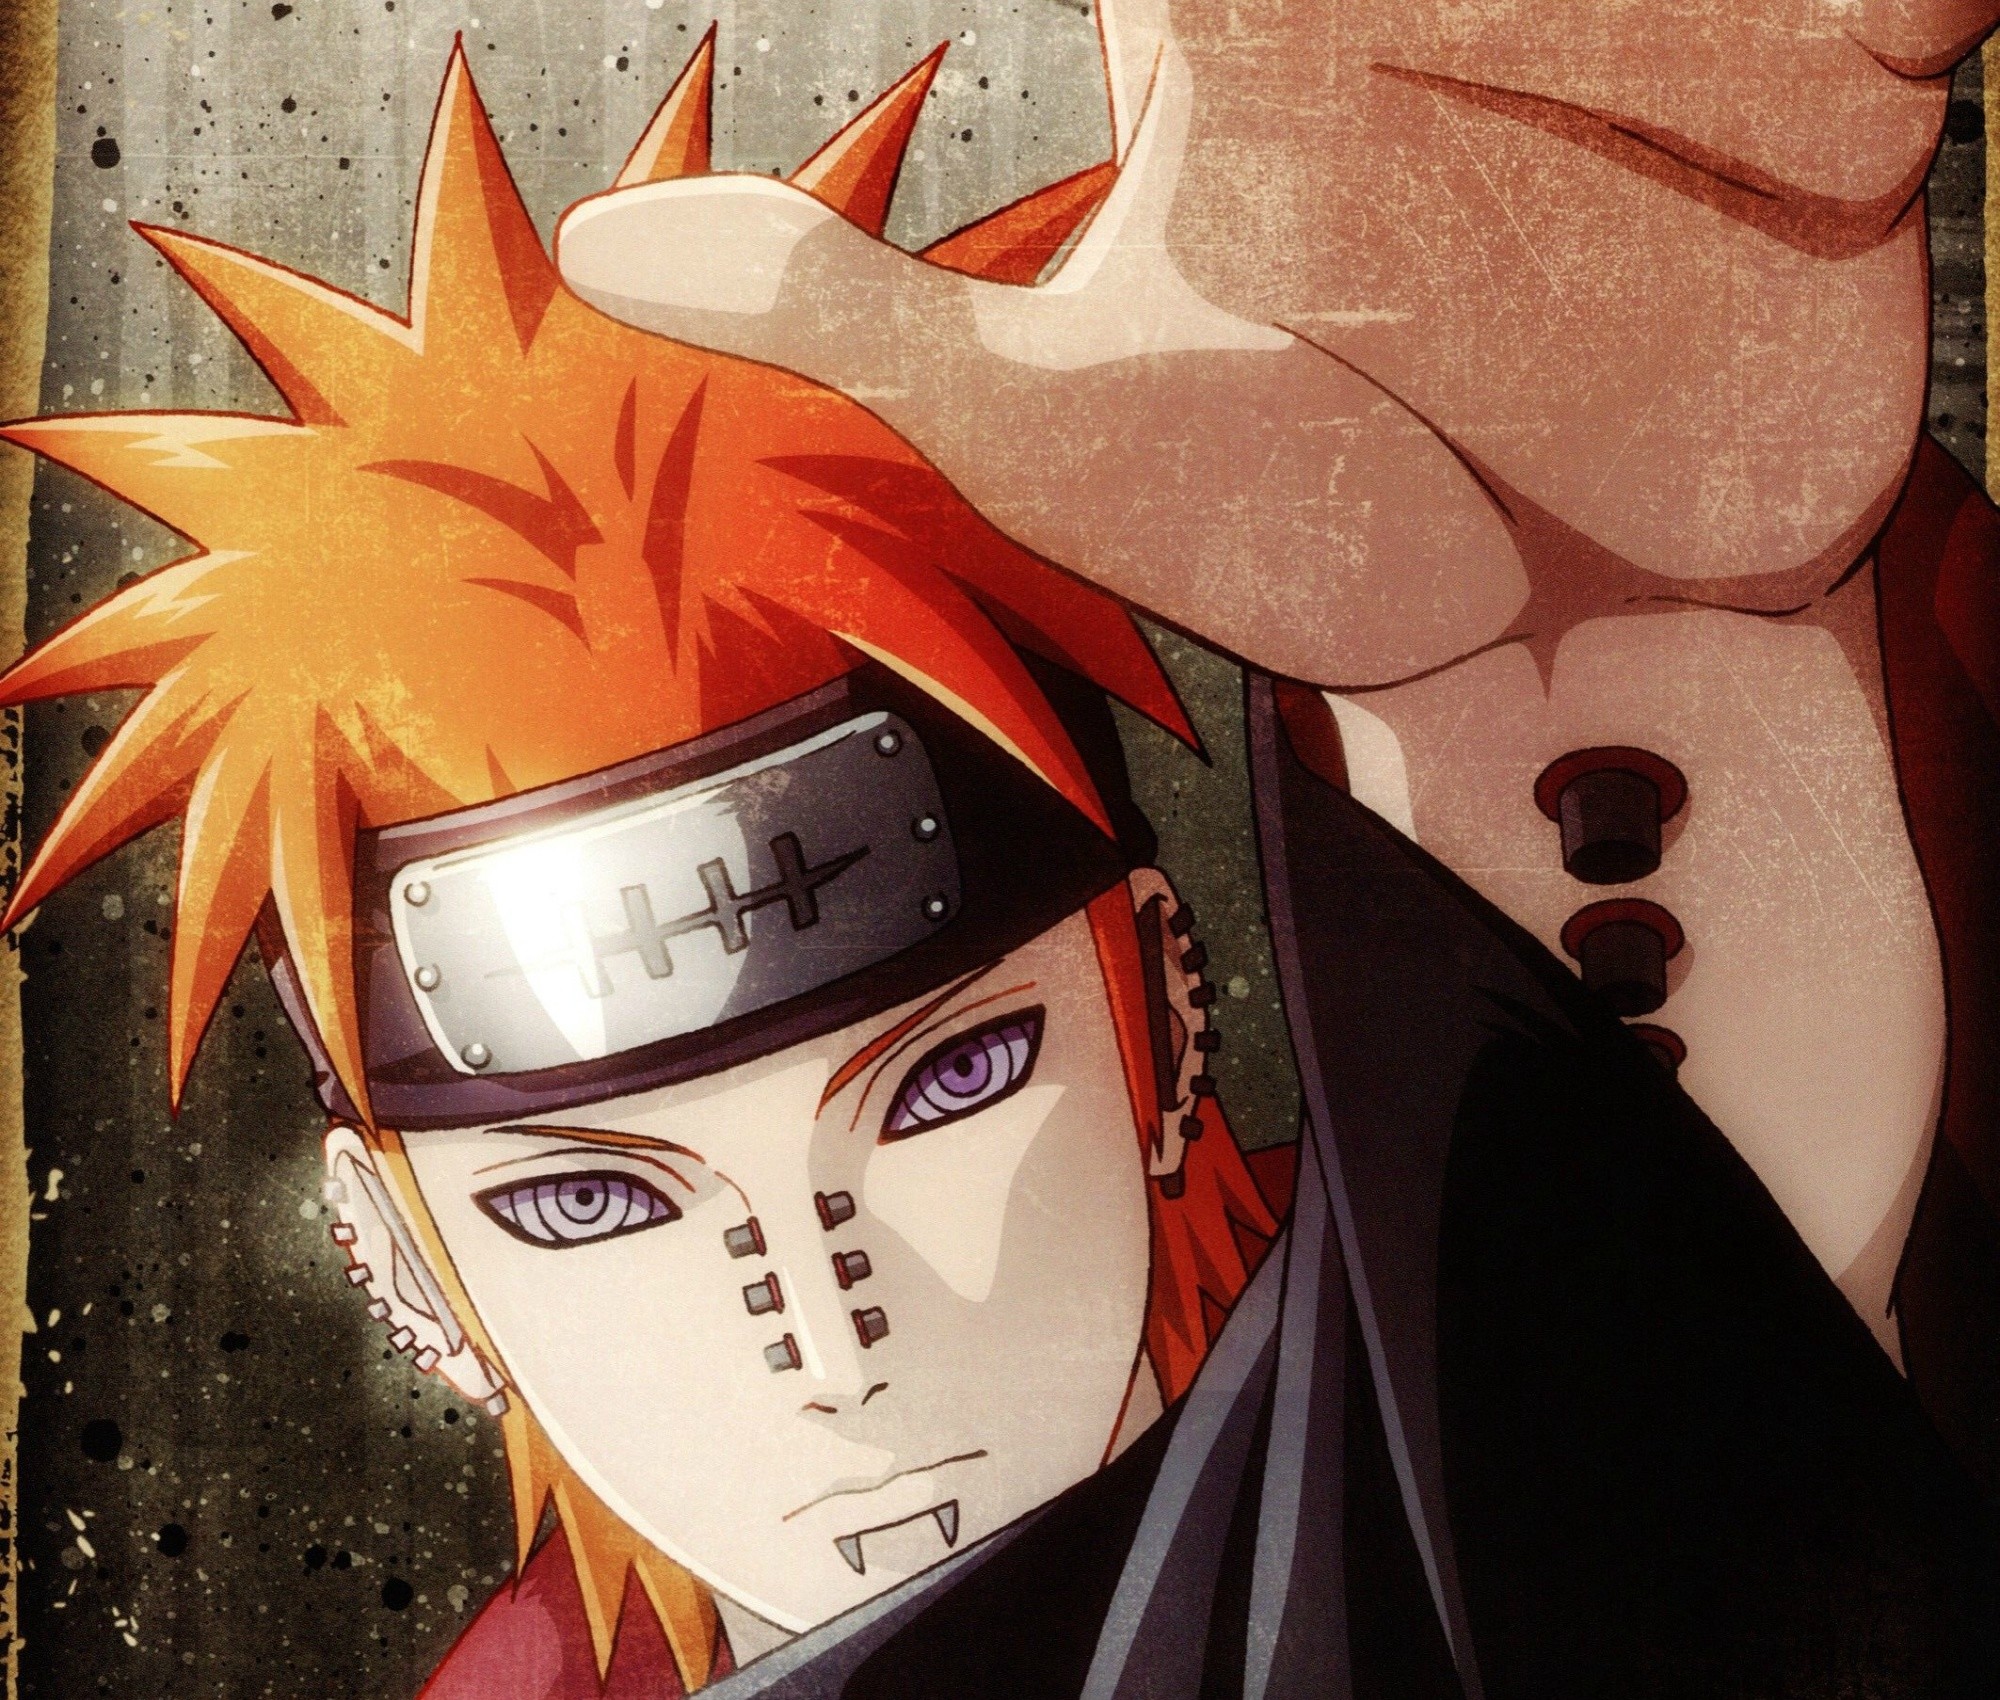 Cool Pain Naruto Wallpapers